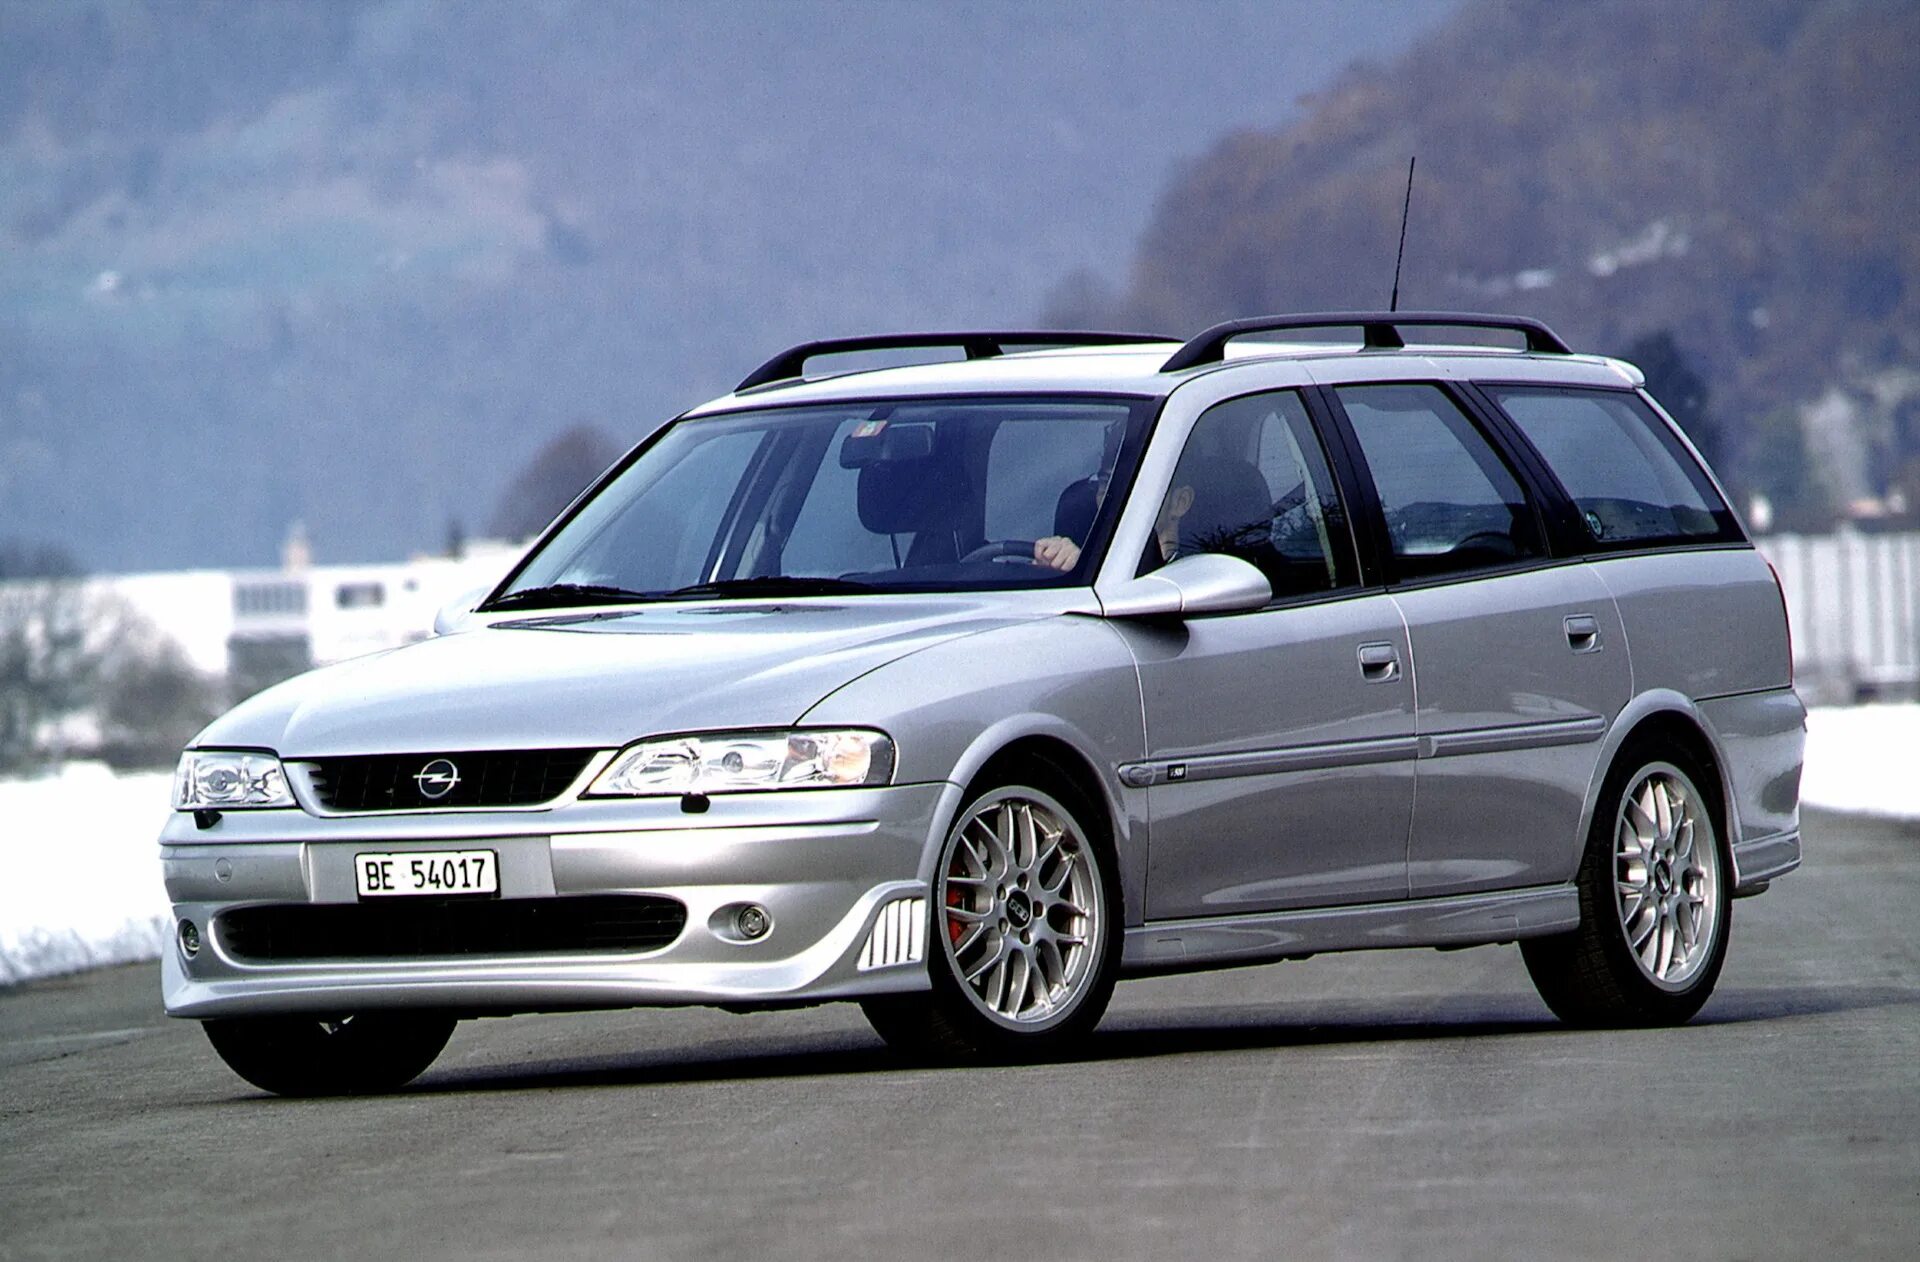 Opel Vectra b универсал 1999. Opel Vectra 2000 универсал. Opel Vectra b универсал 2002. Opel Vectra b Caravan i500.